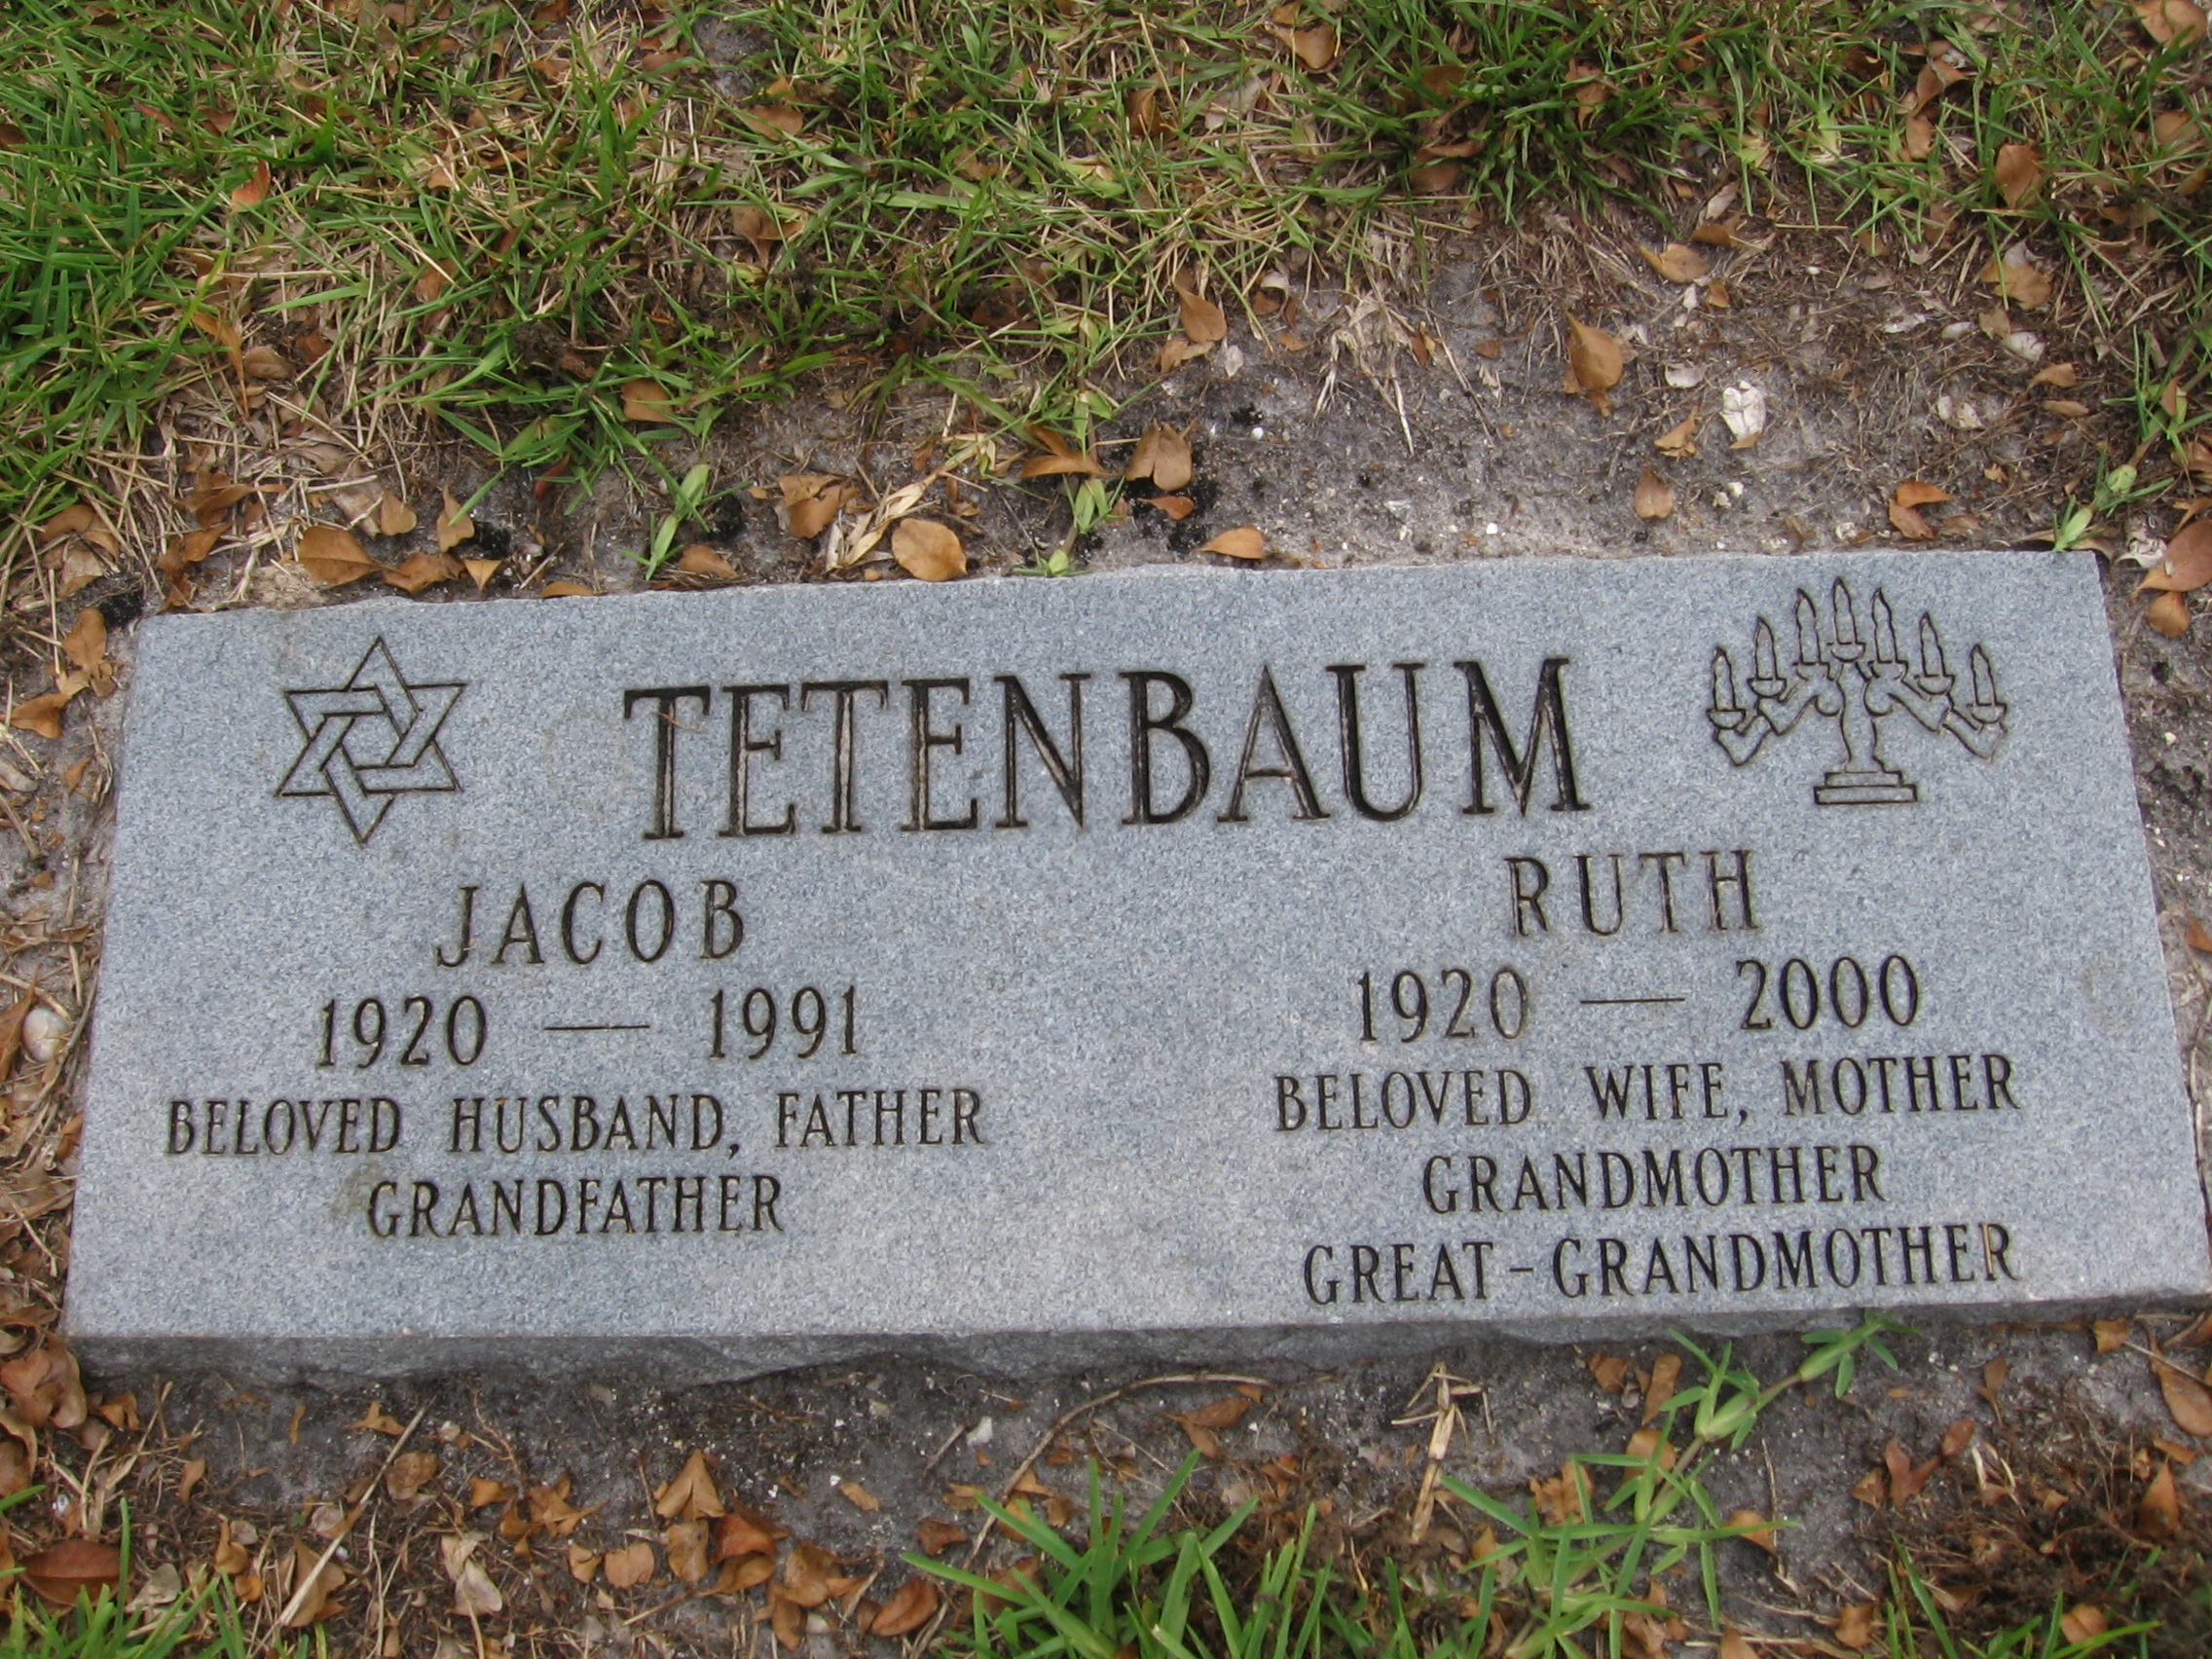 Jacob Tetenbaum